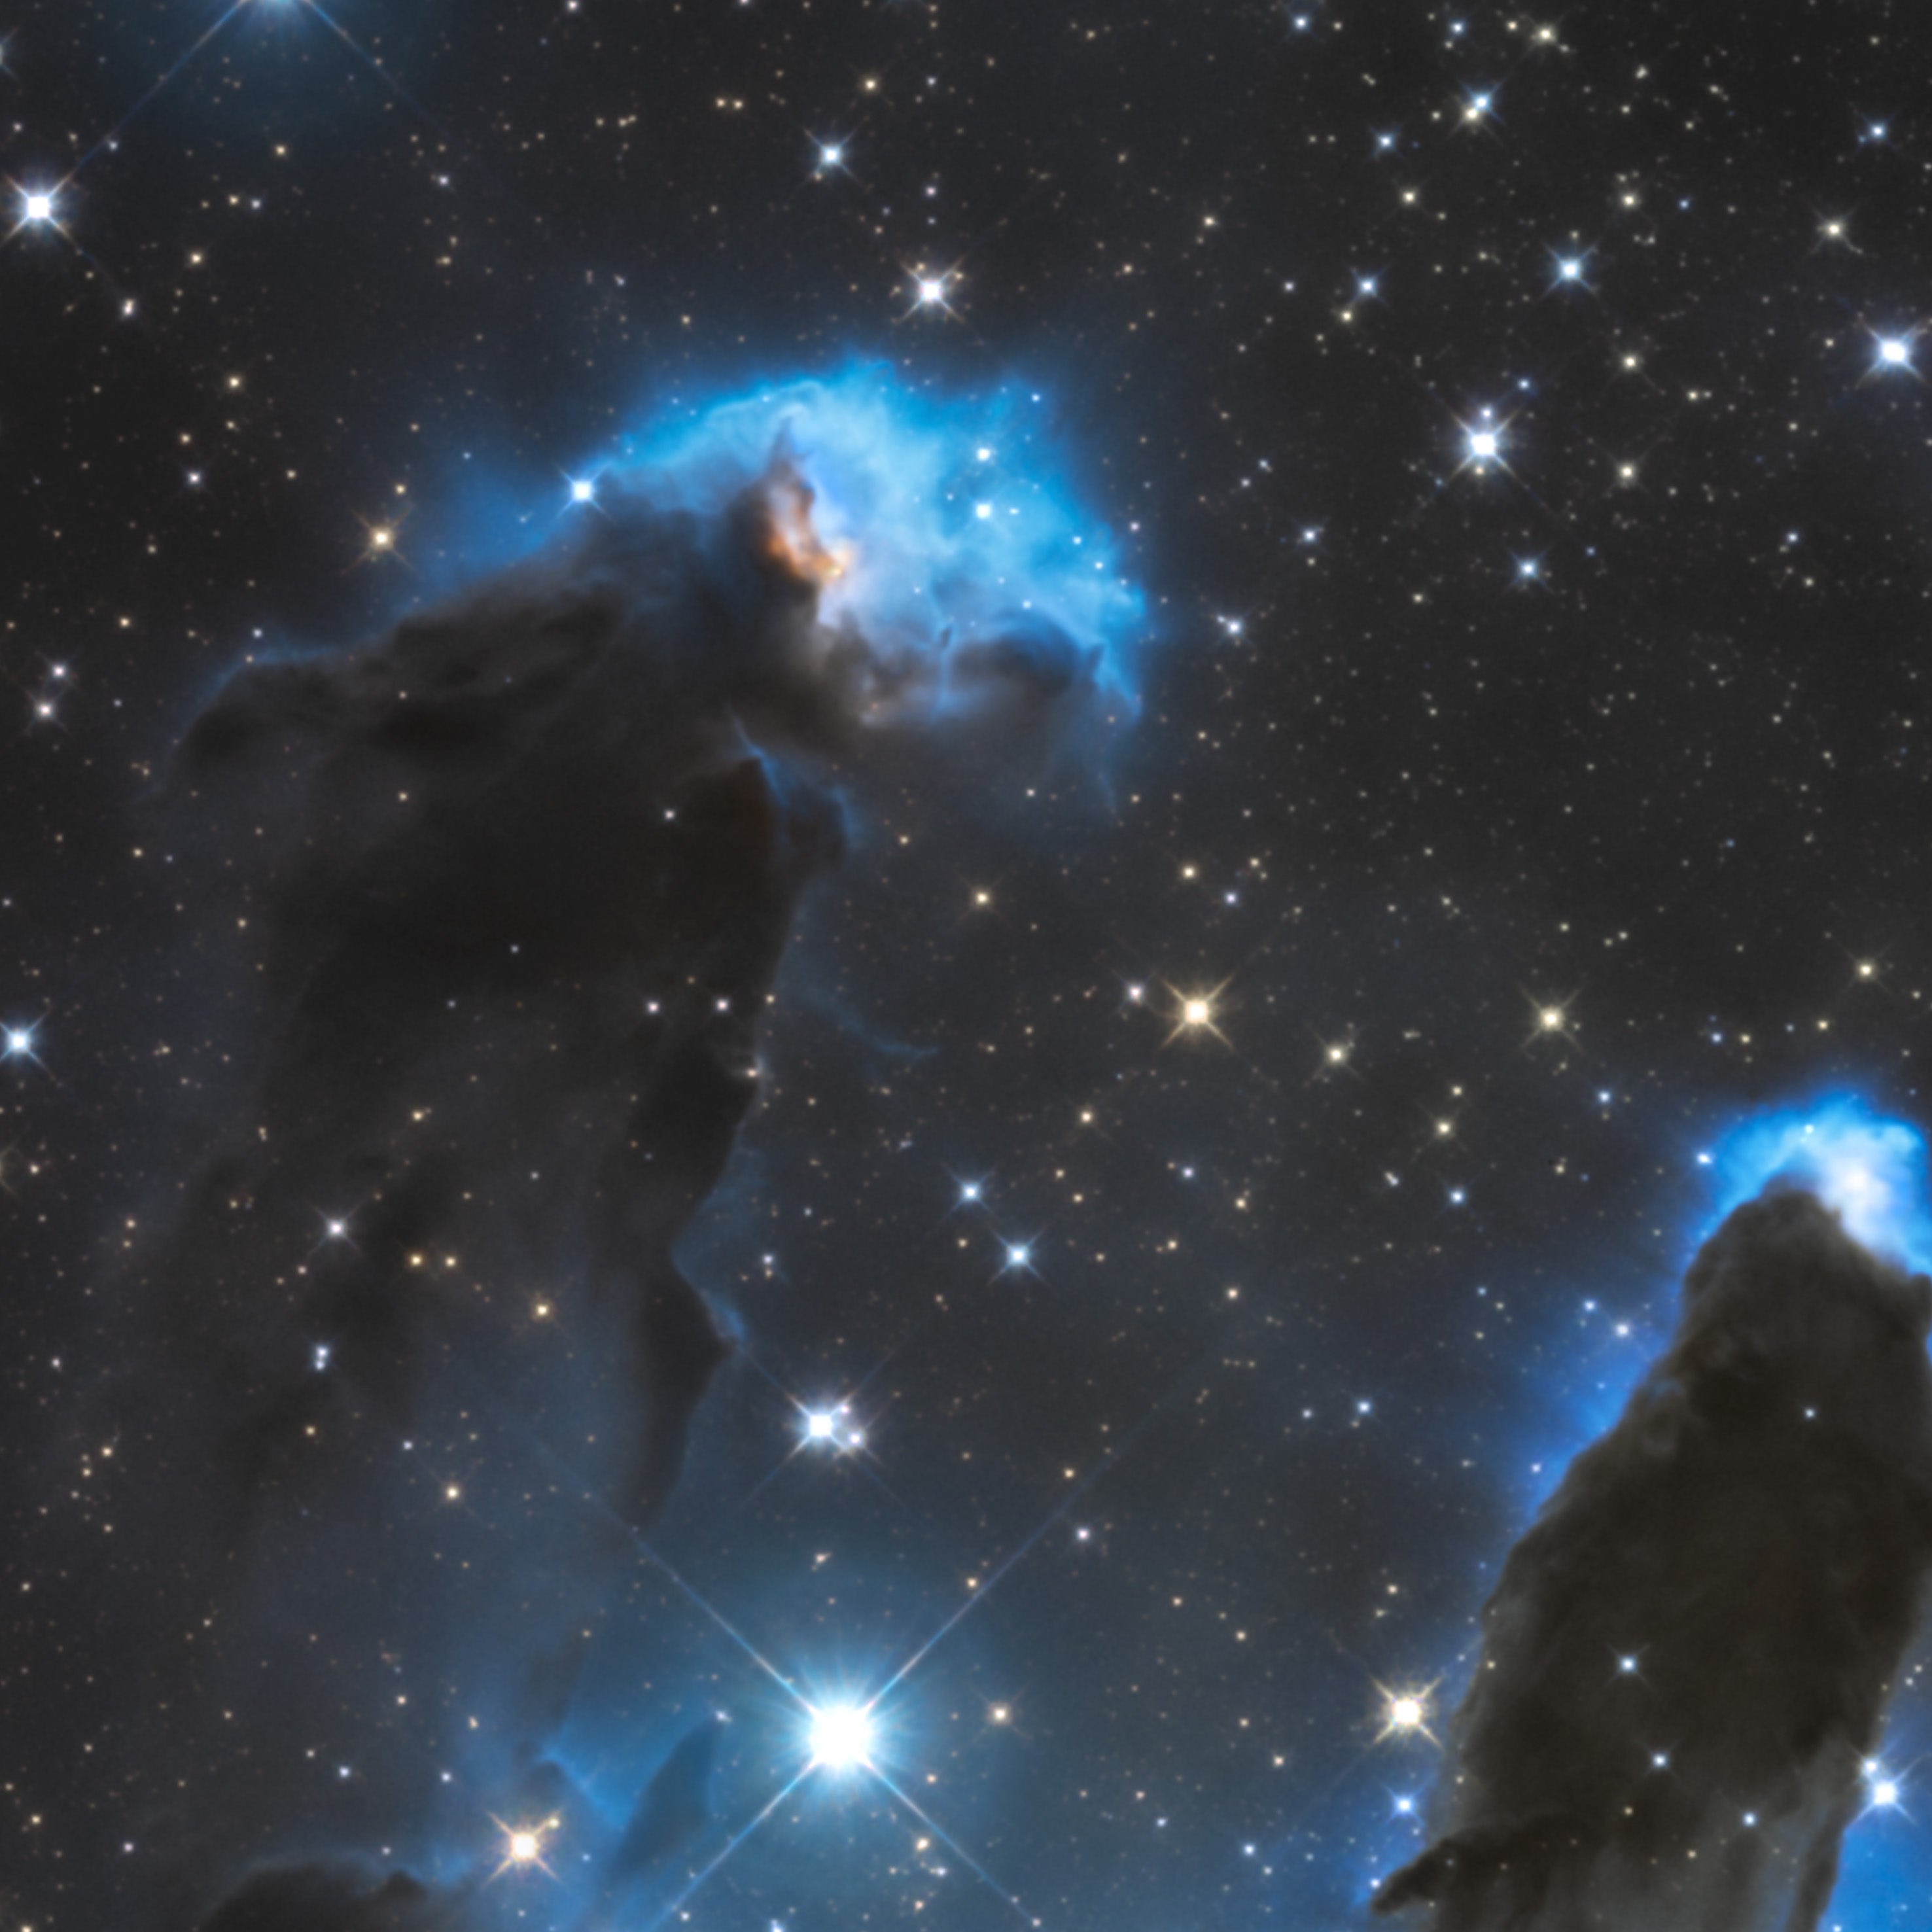 Eagle Nebula - Pillars of Creation - Infrared